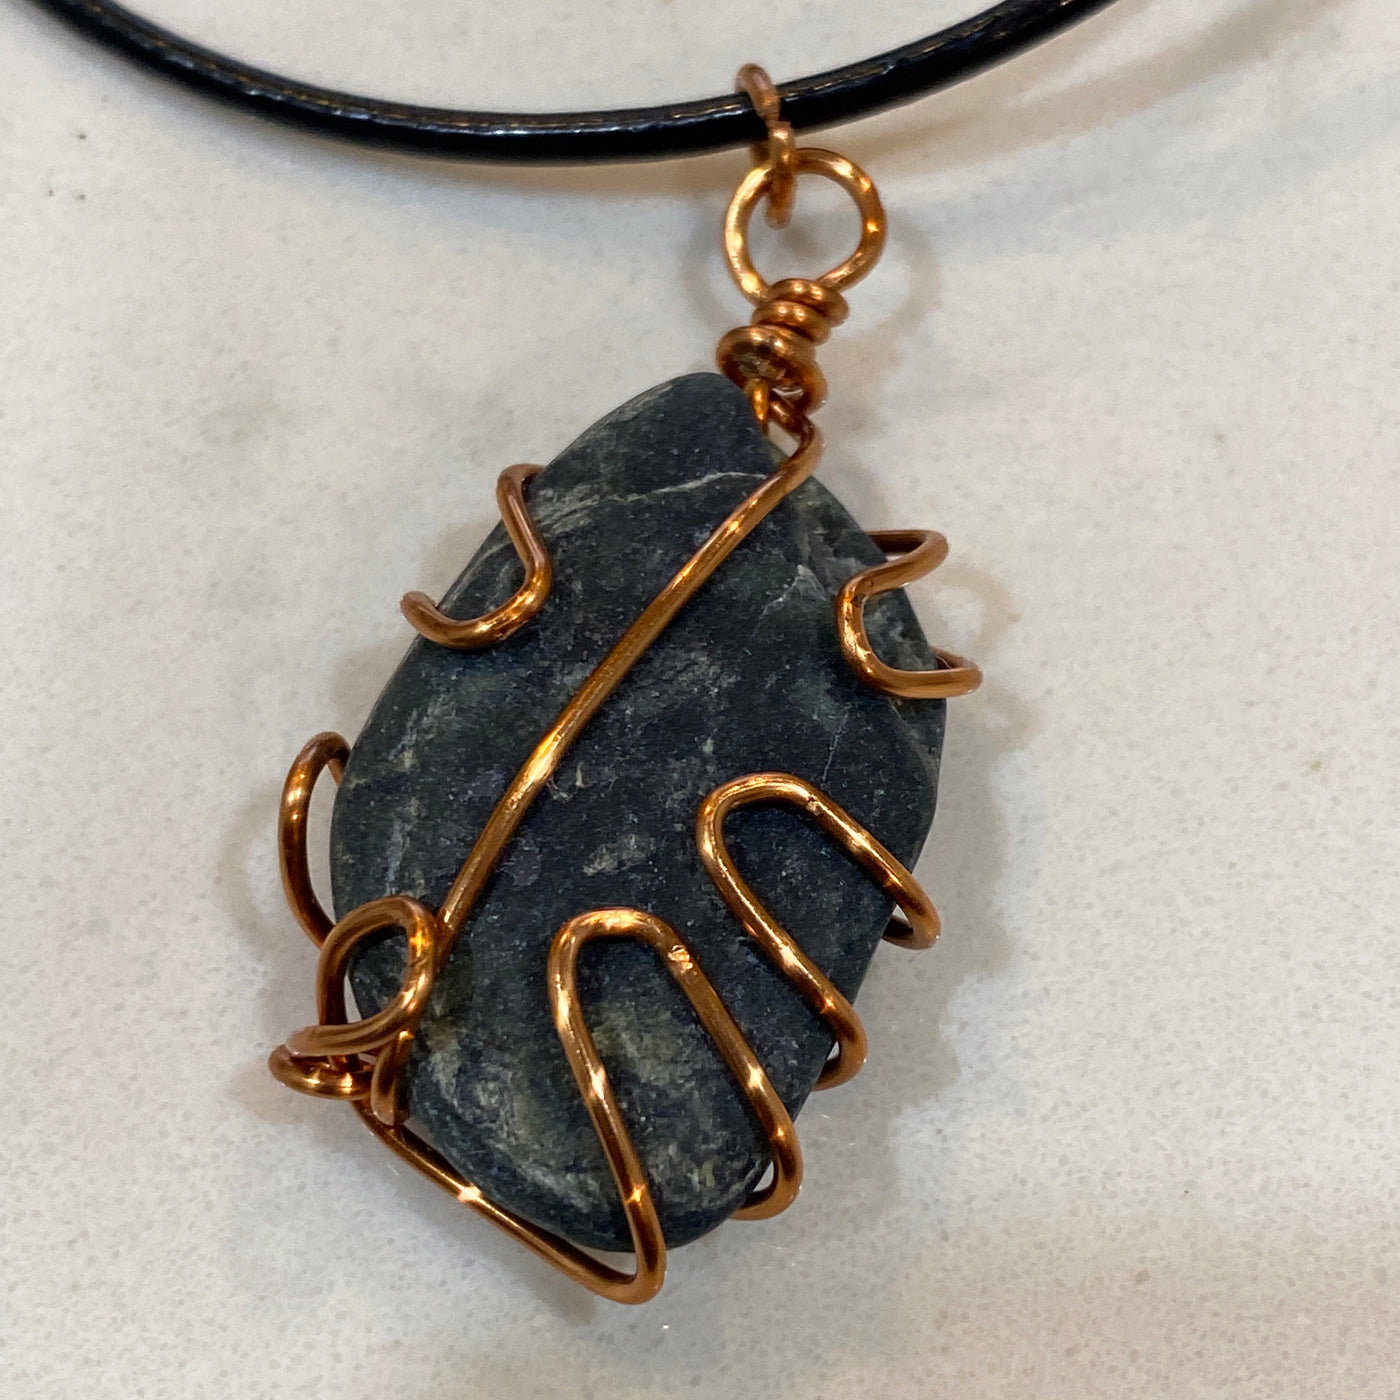 Black stone and wire. Small pendant.